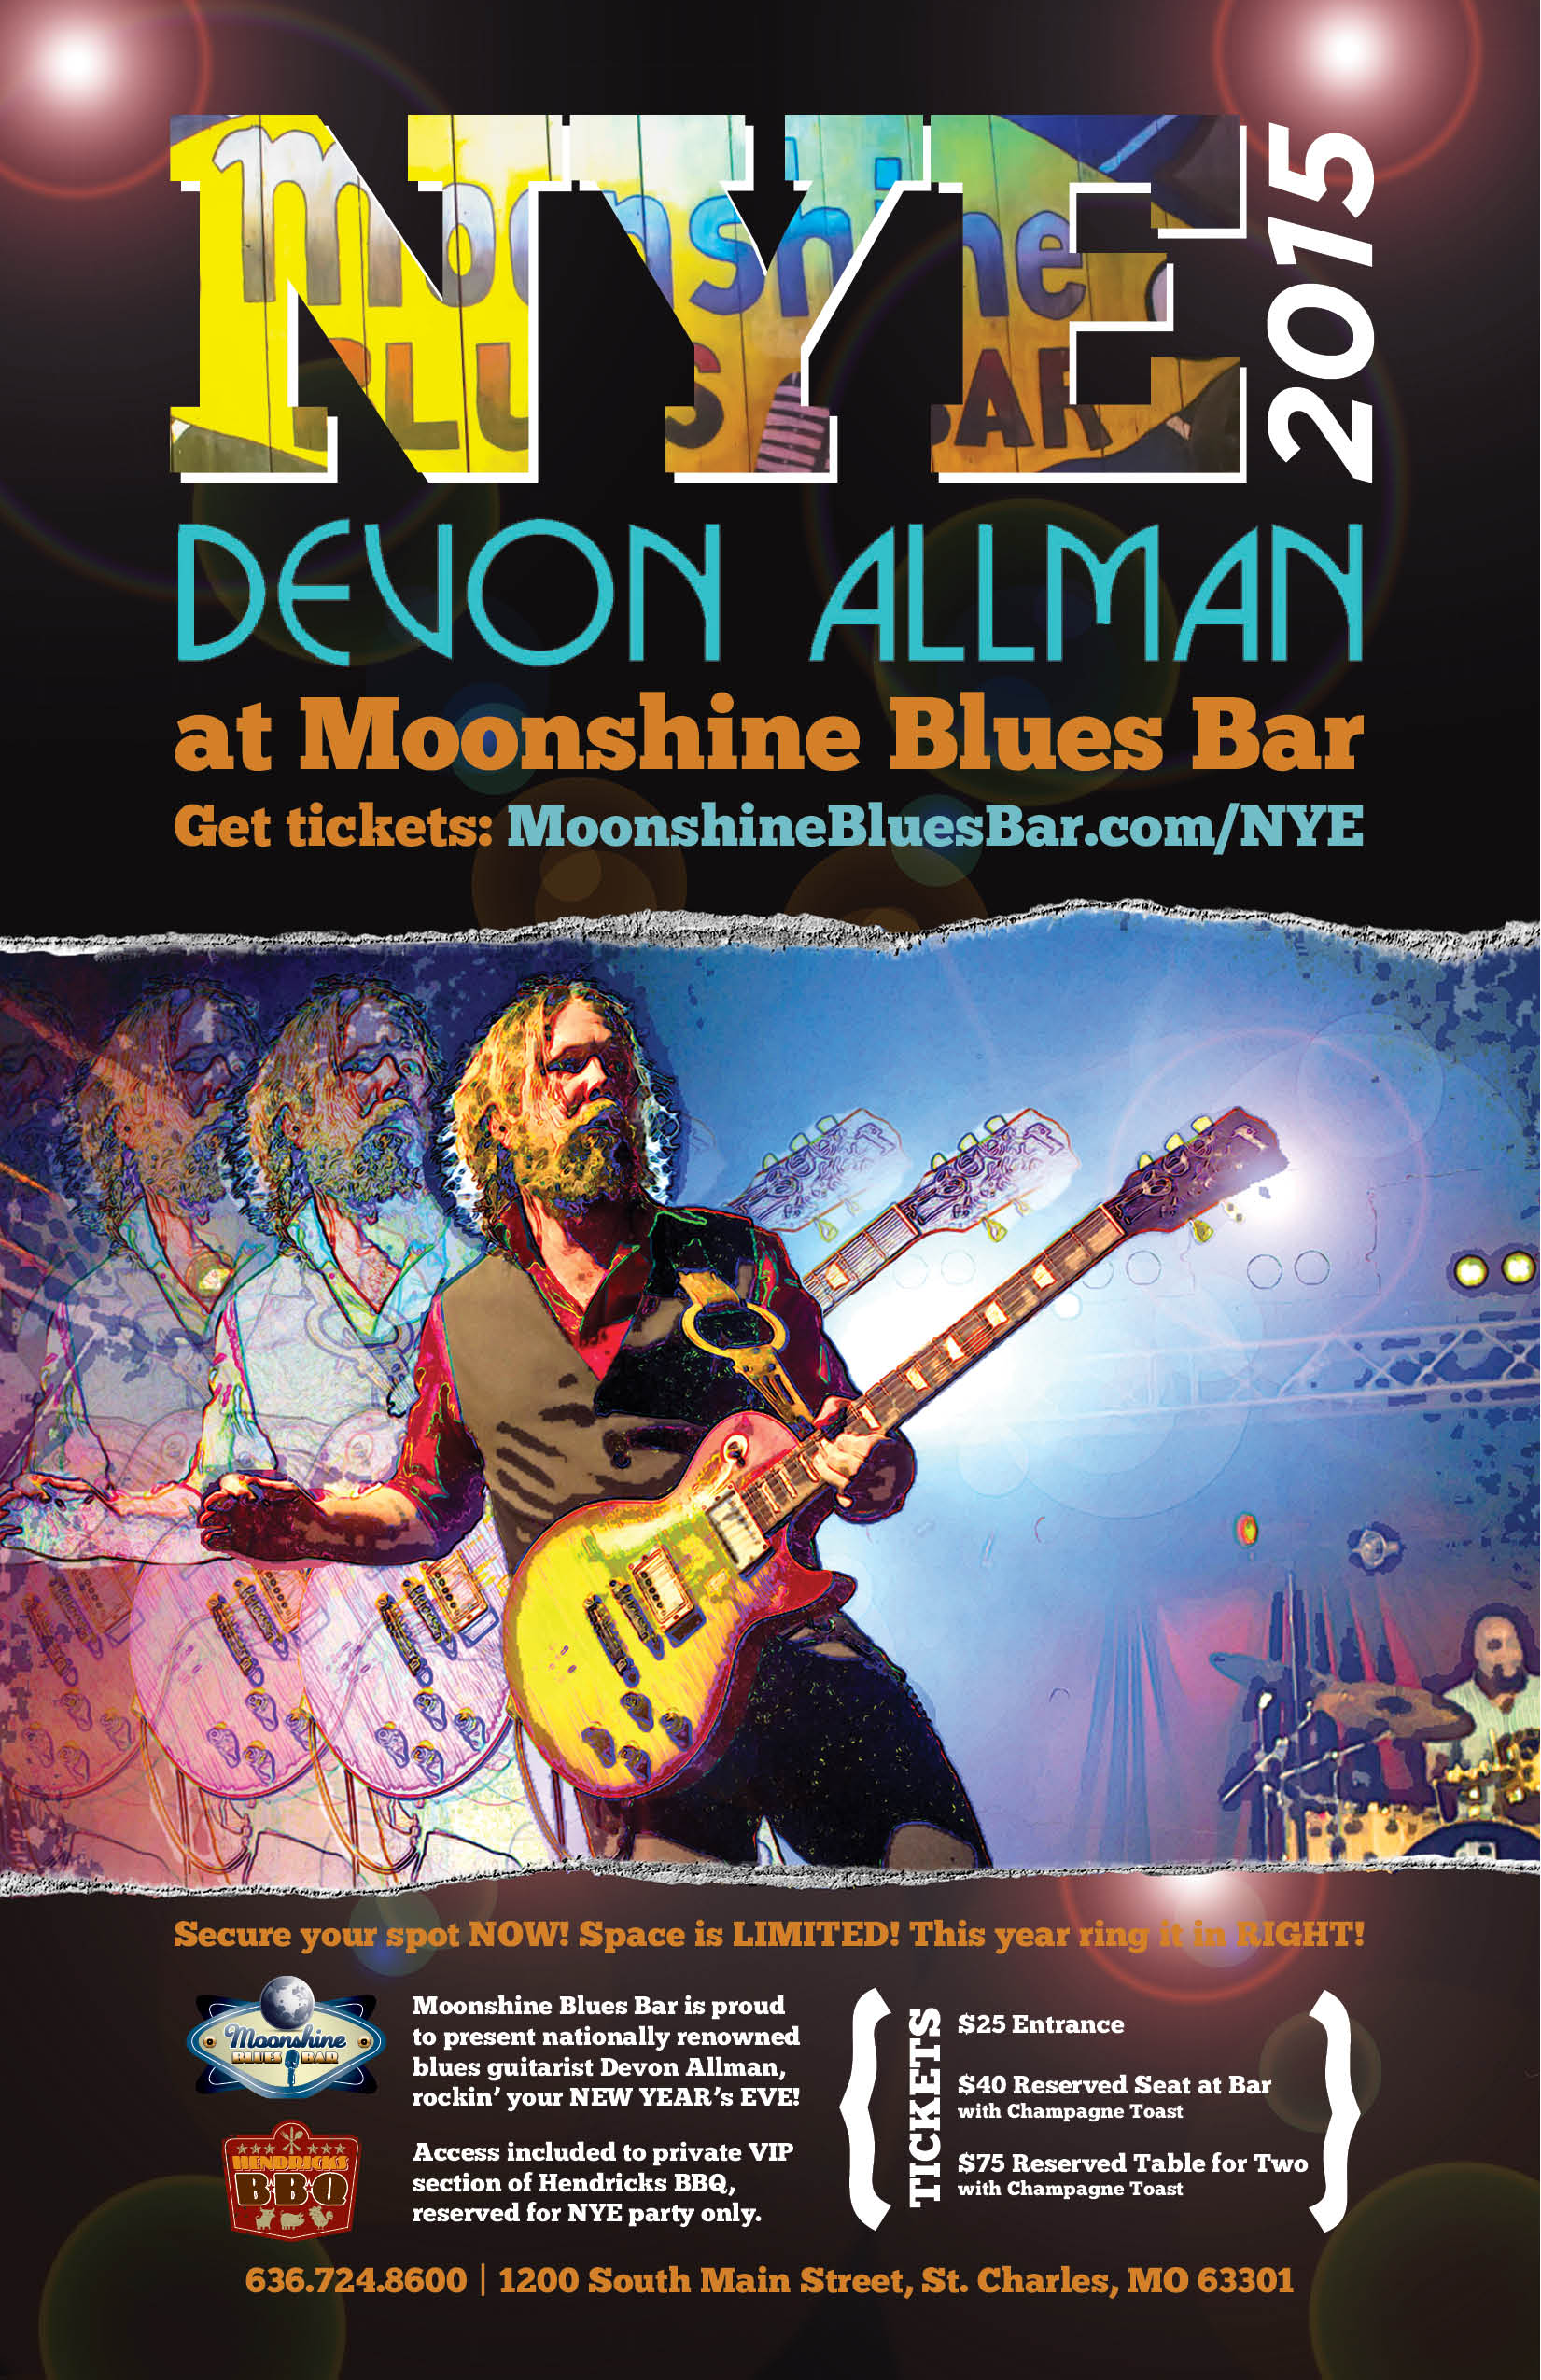 Devon Allman, rockin' the Moonshine Blues Bar this New Year's Eve